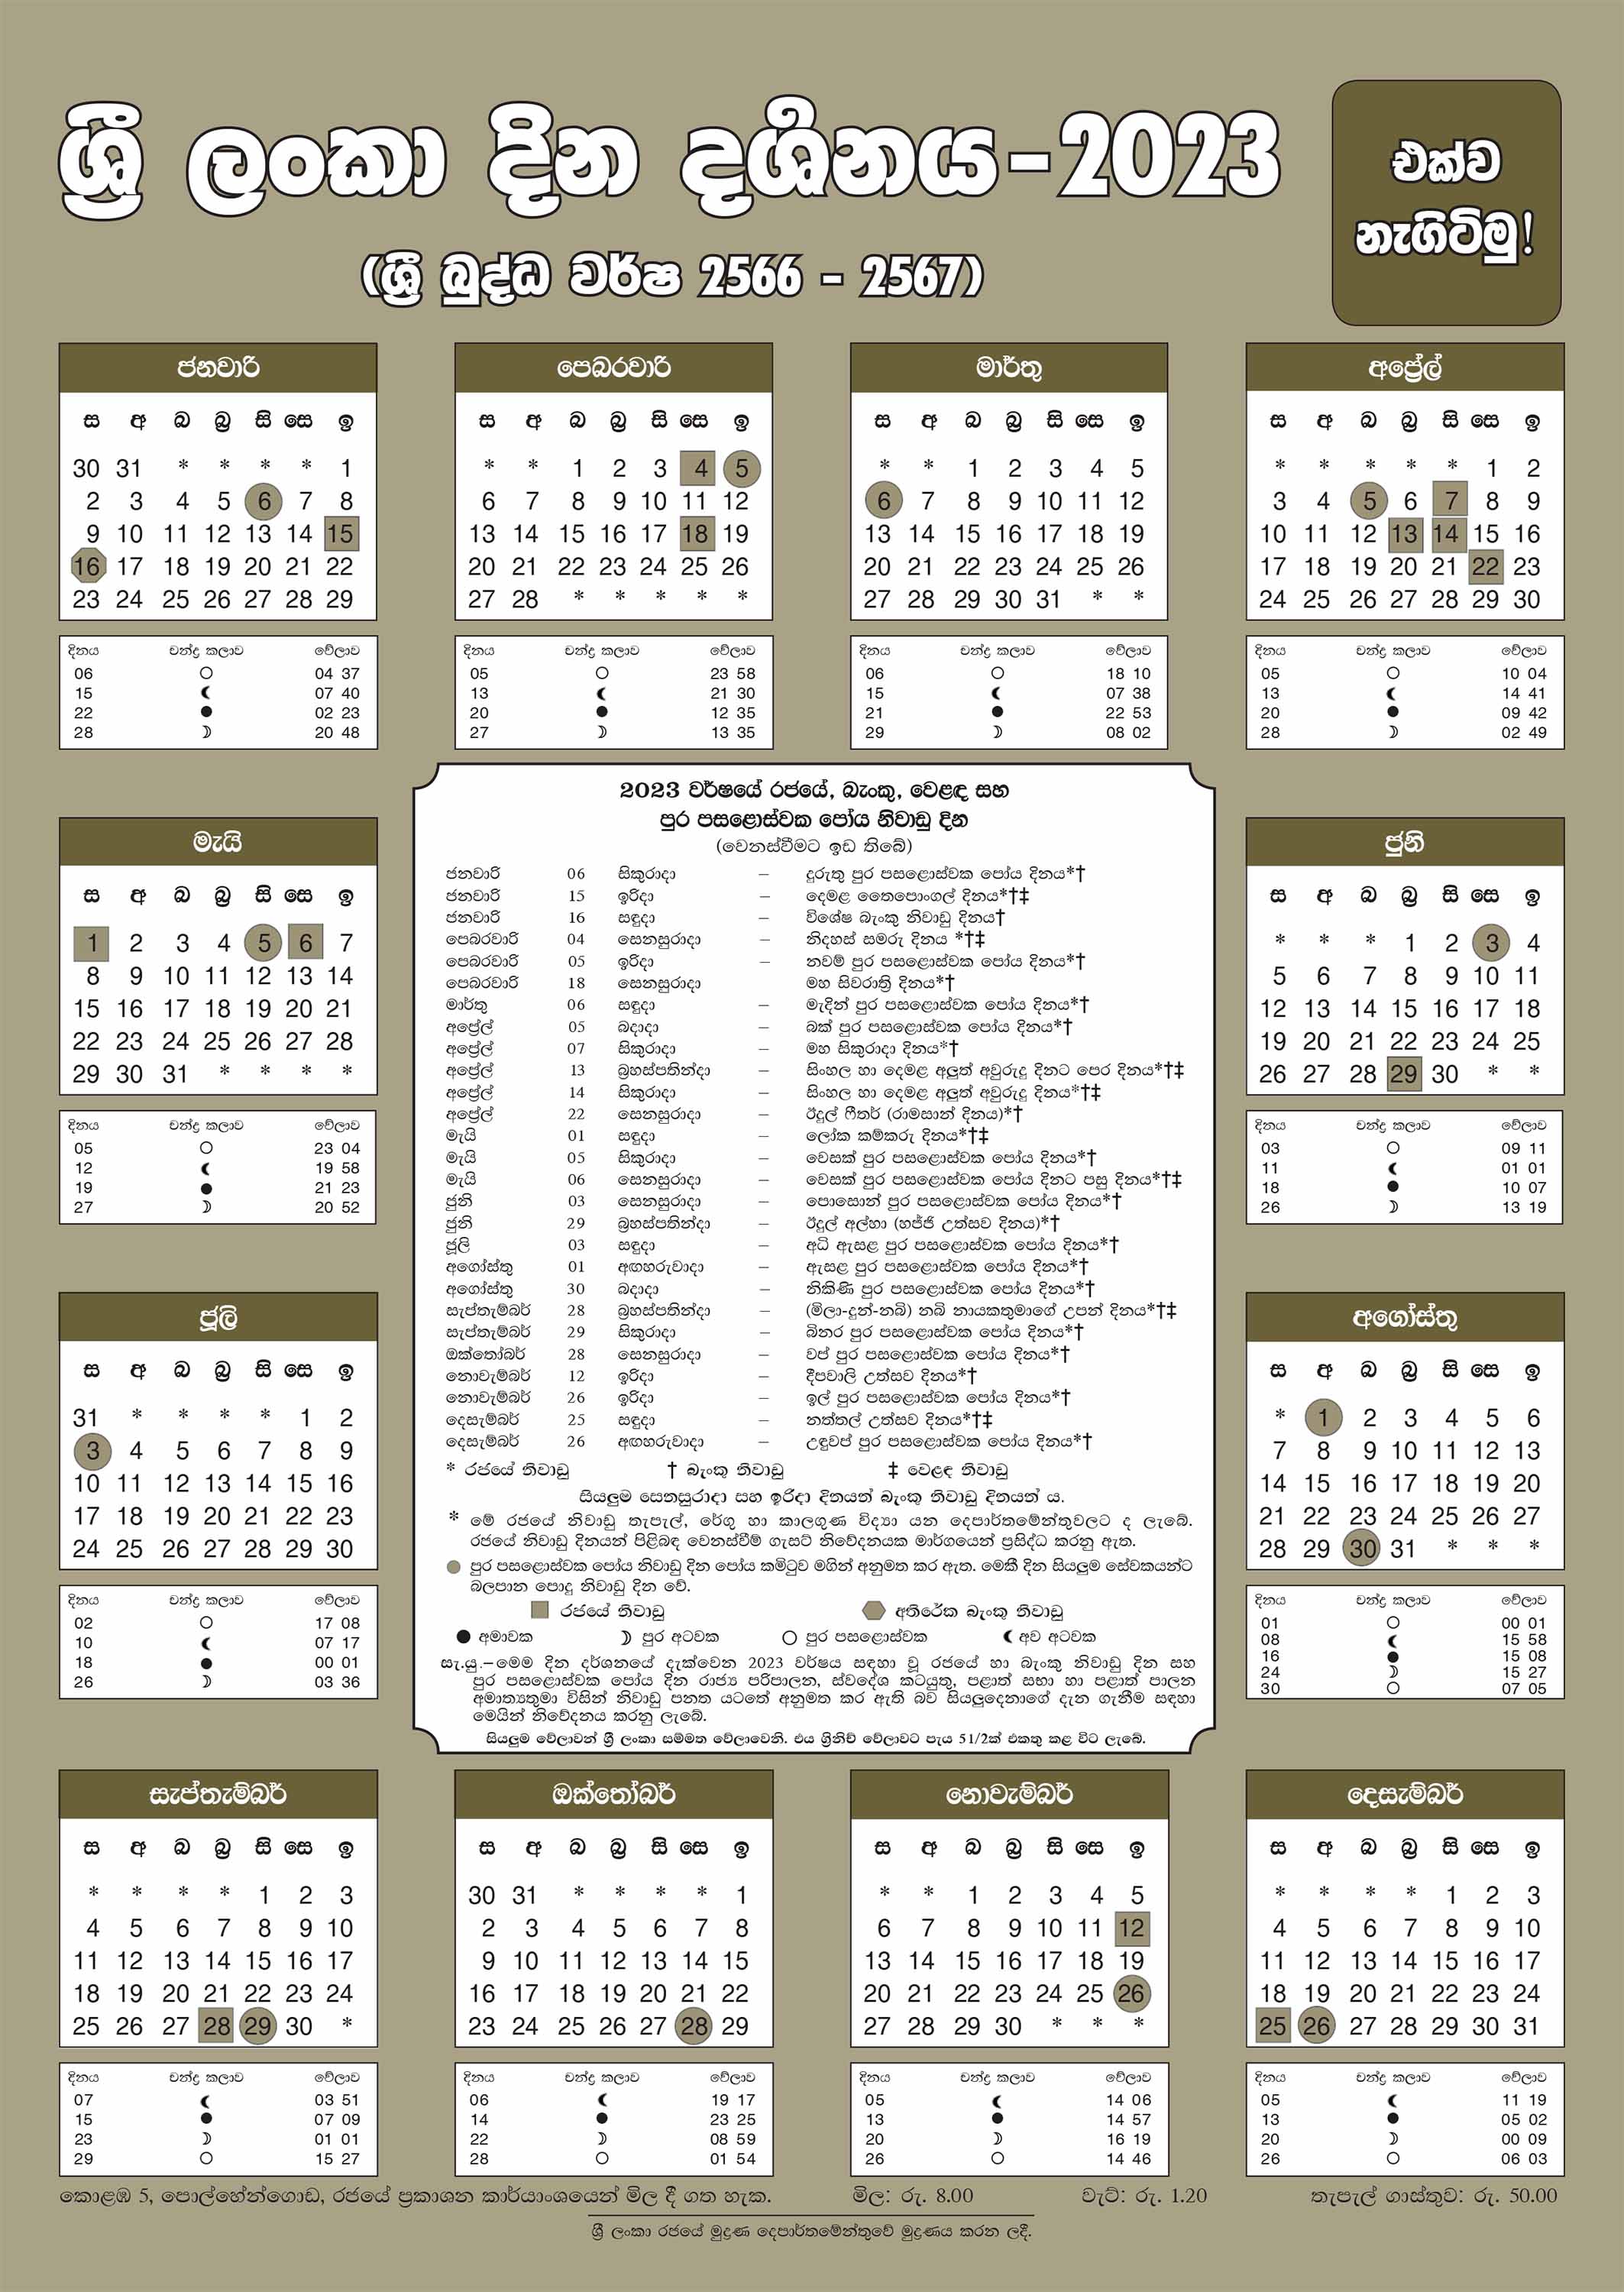 Sri Lanka Desk Calendar 2023 - Public, Bank, Mercantile, and Full Moon Poya Holidays